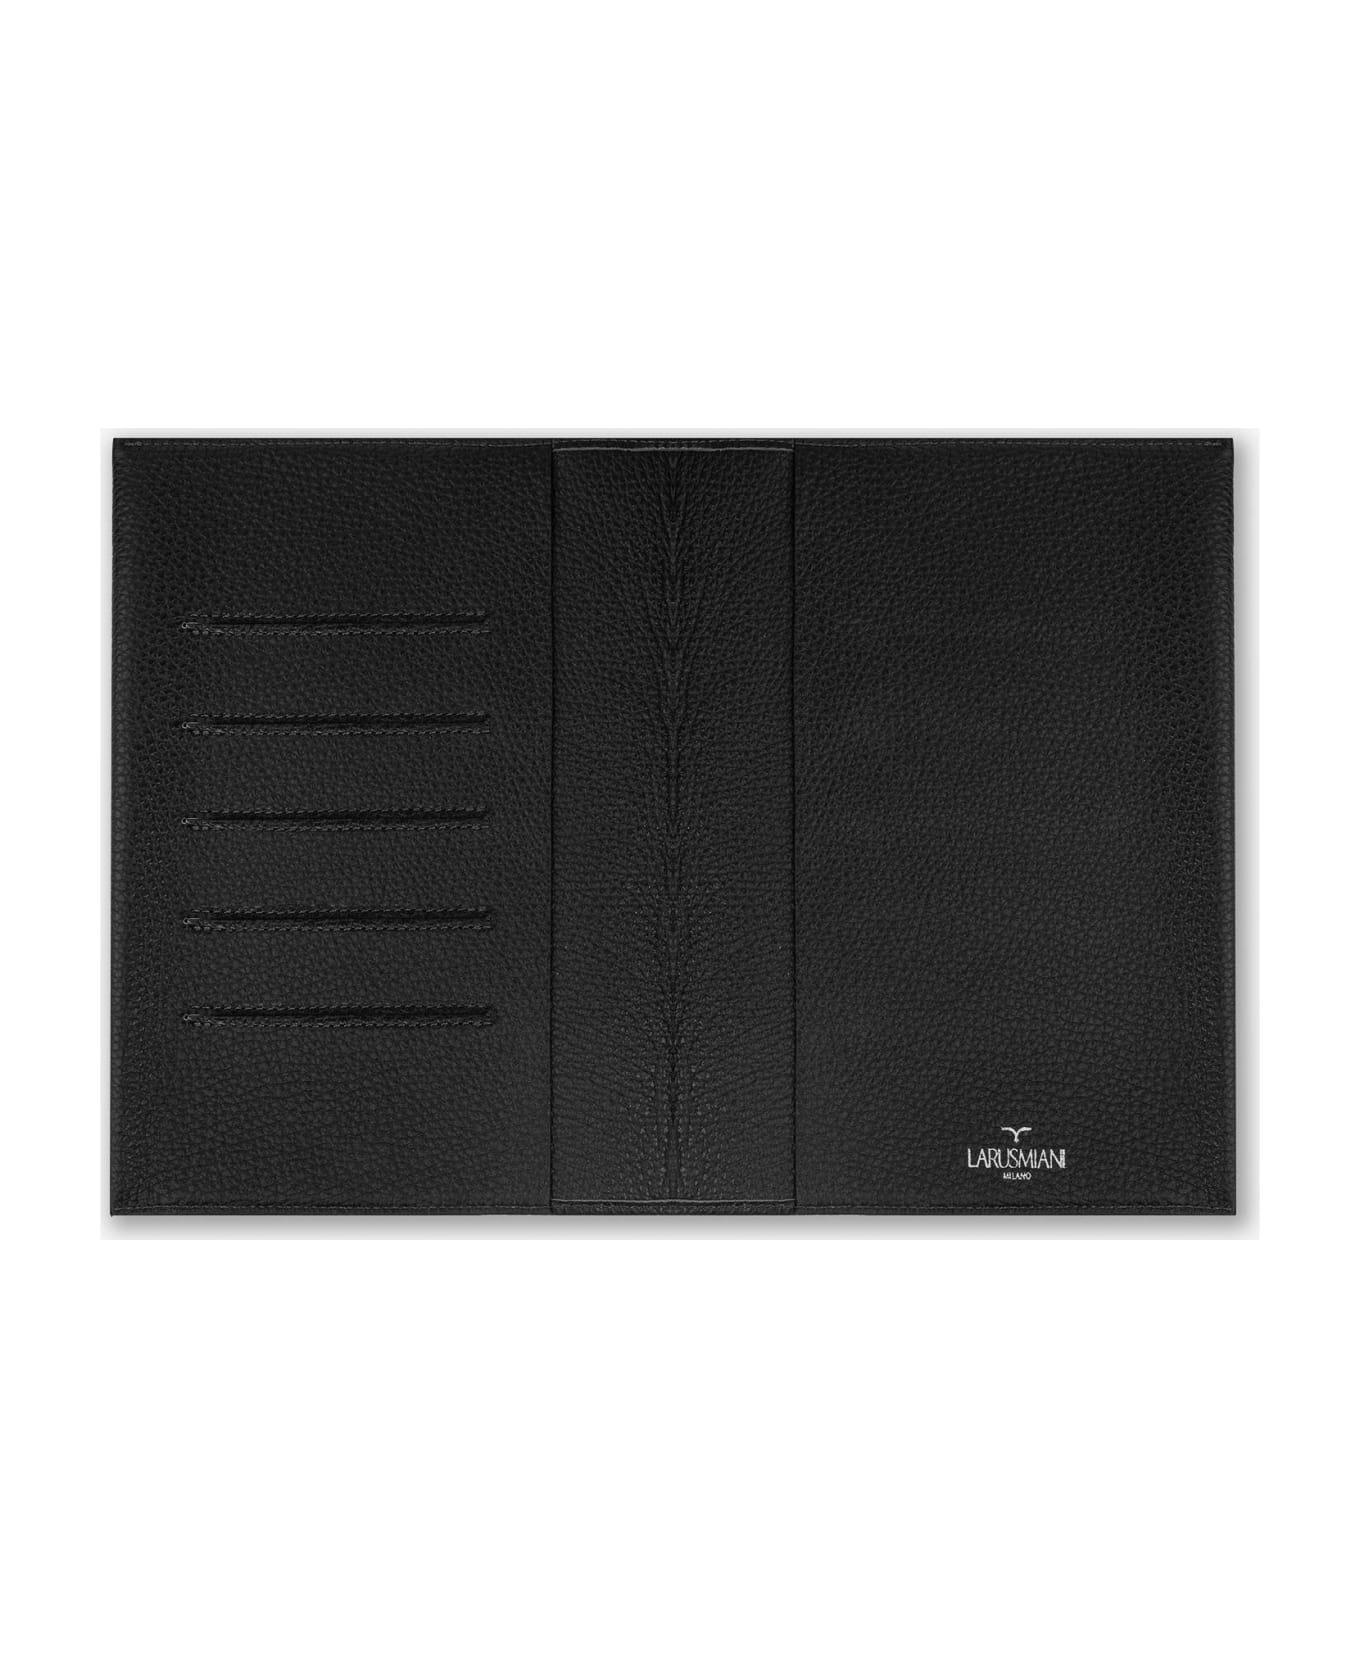 Larusmiani Leather Car Folder  - Black